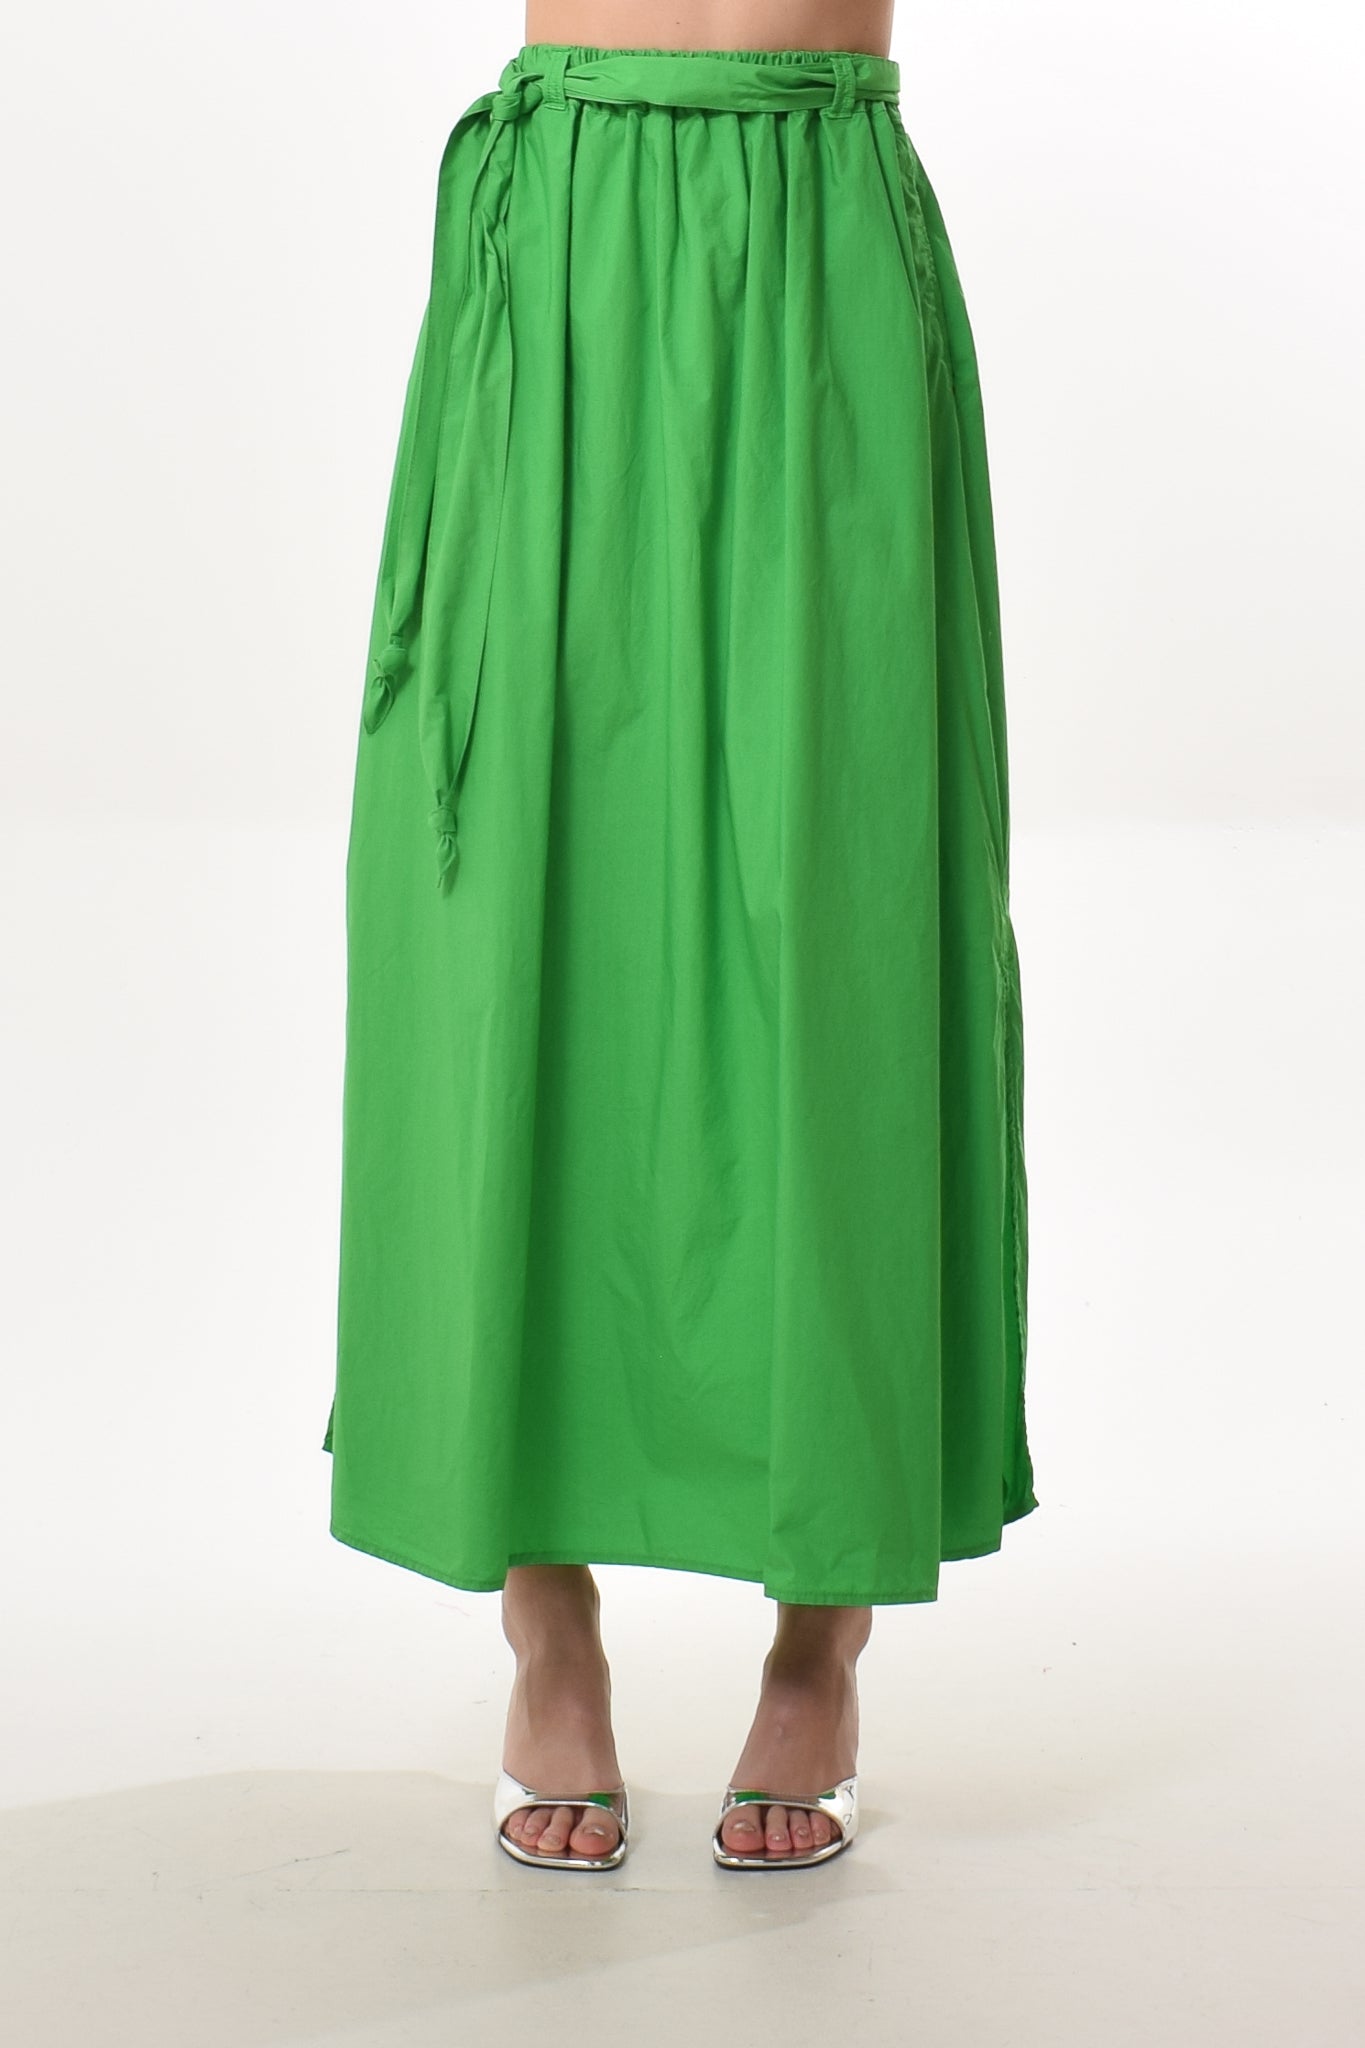 Flaine skirt in Grass (cotton)